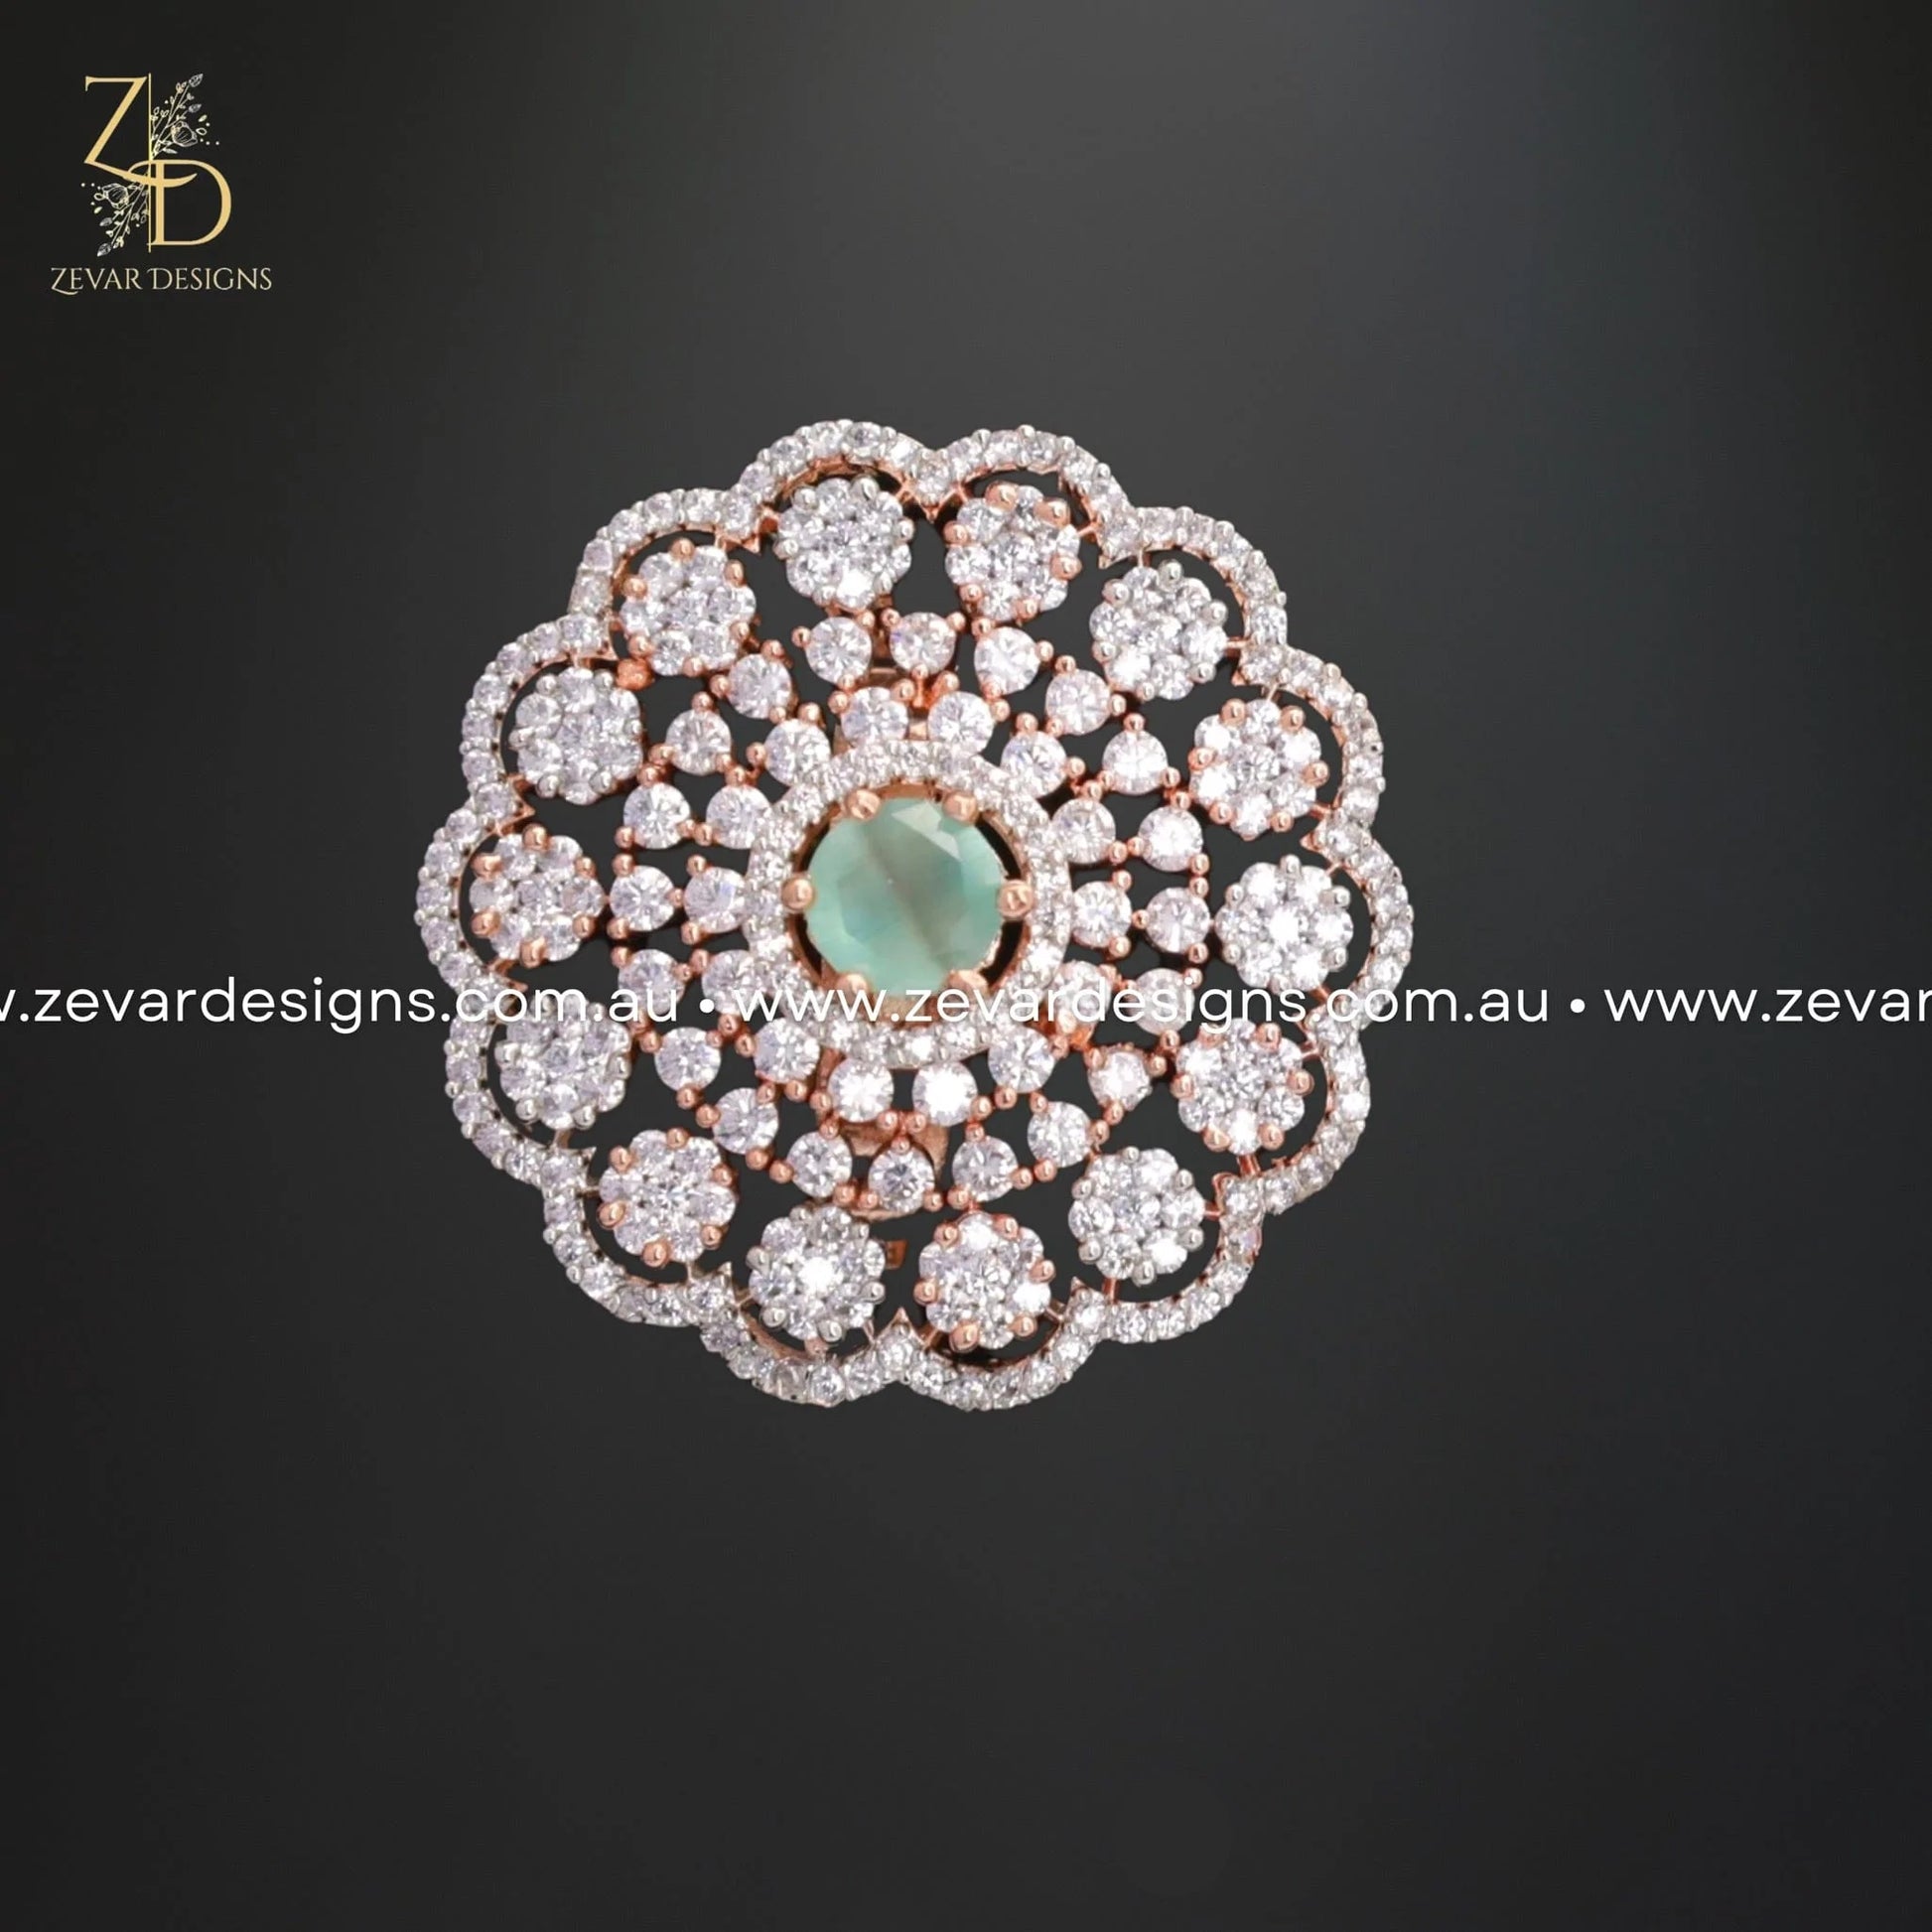 Zevar Designs Rings - AD AD/Zircon Ring in Rose Gold - Mint